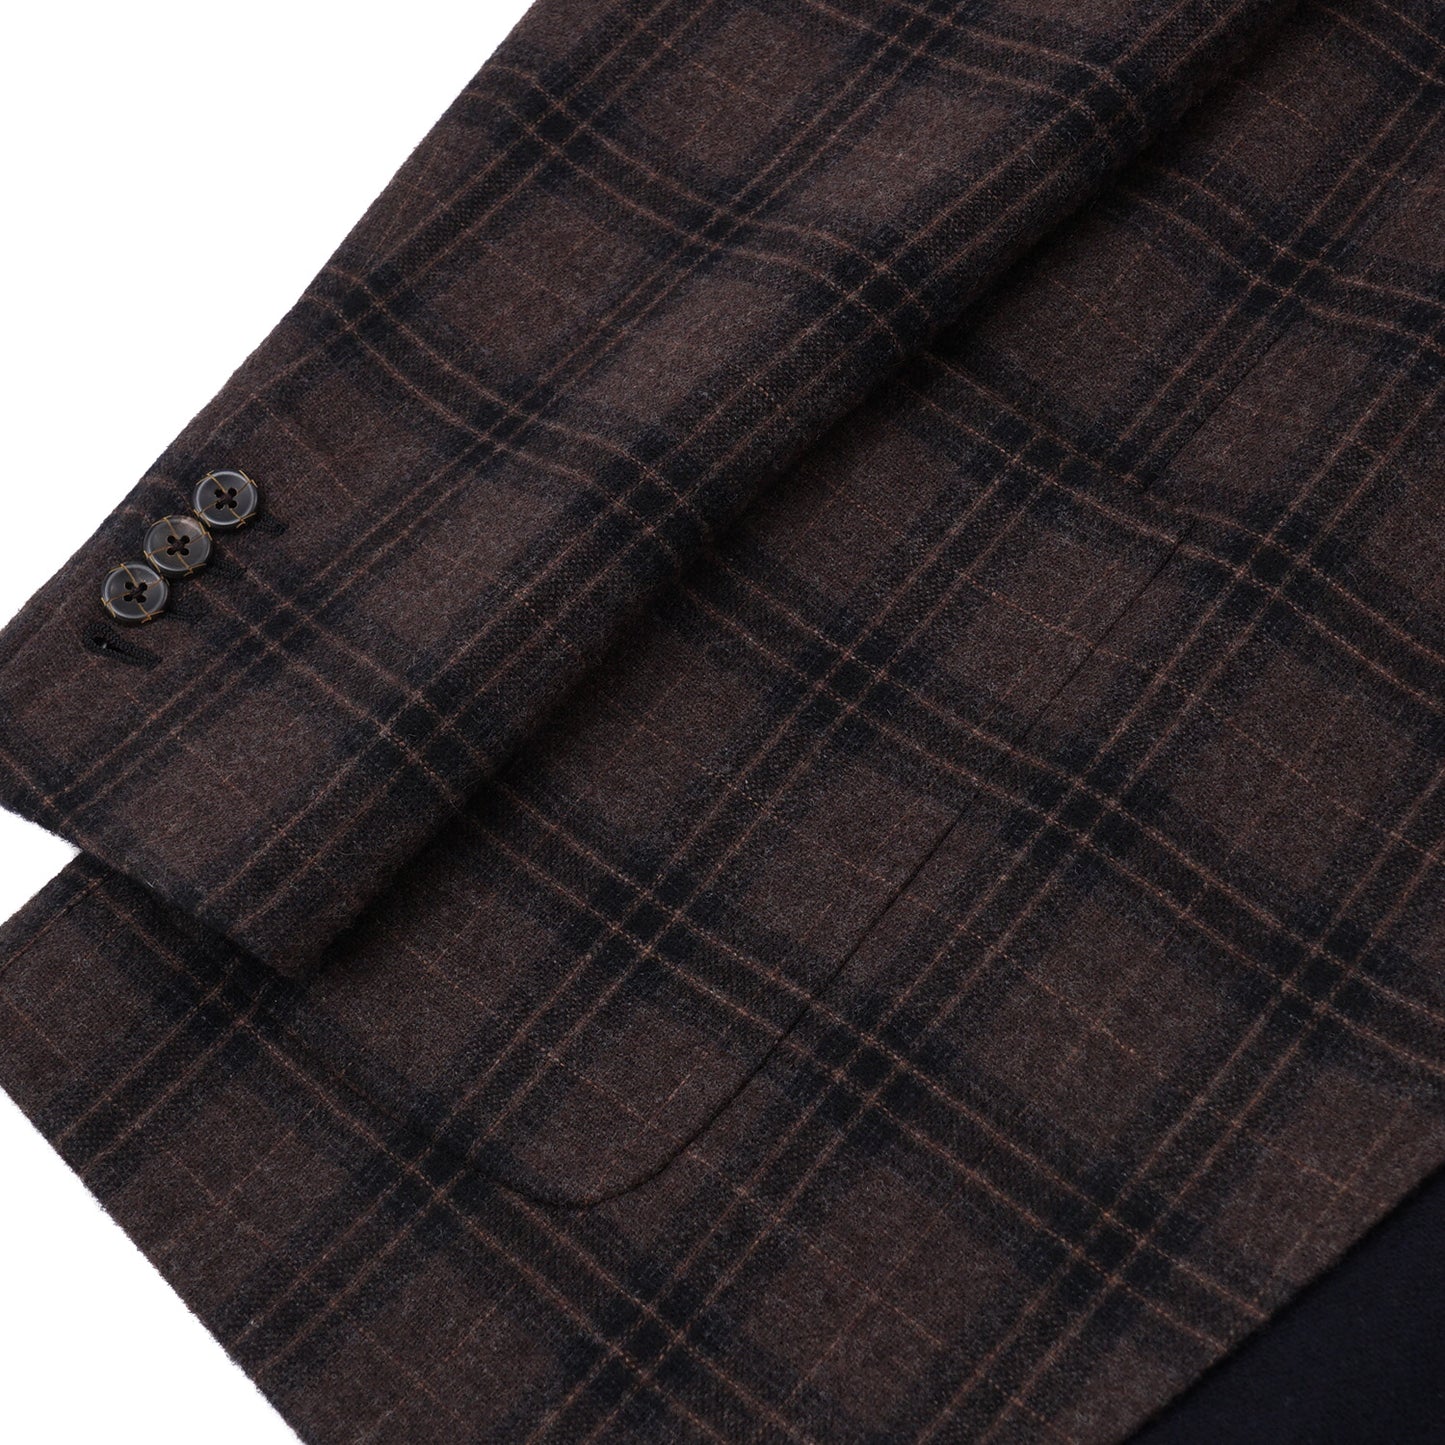 Belvest Unlined Wool and Cashmere Sport Coat - Top Shelf Apparel